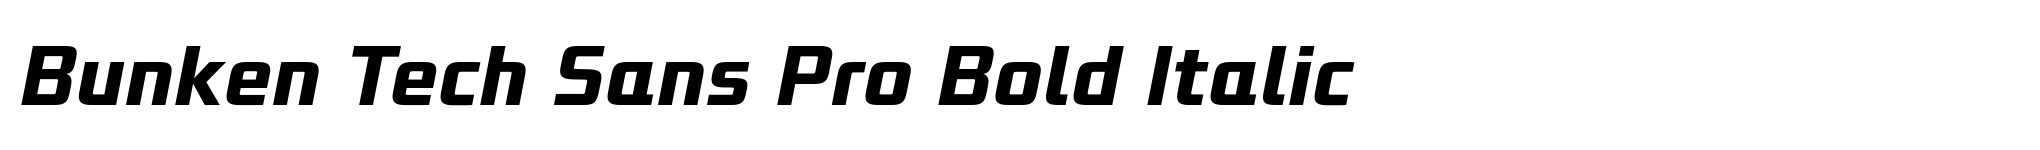 Bunken Tech Sans Pro Bold Italic image